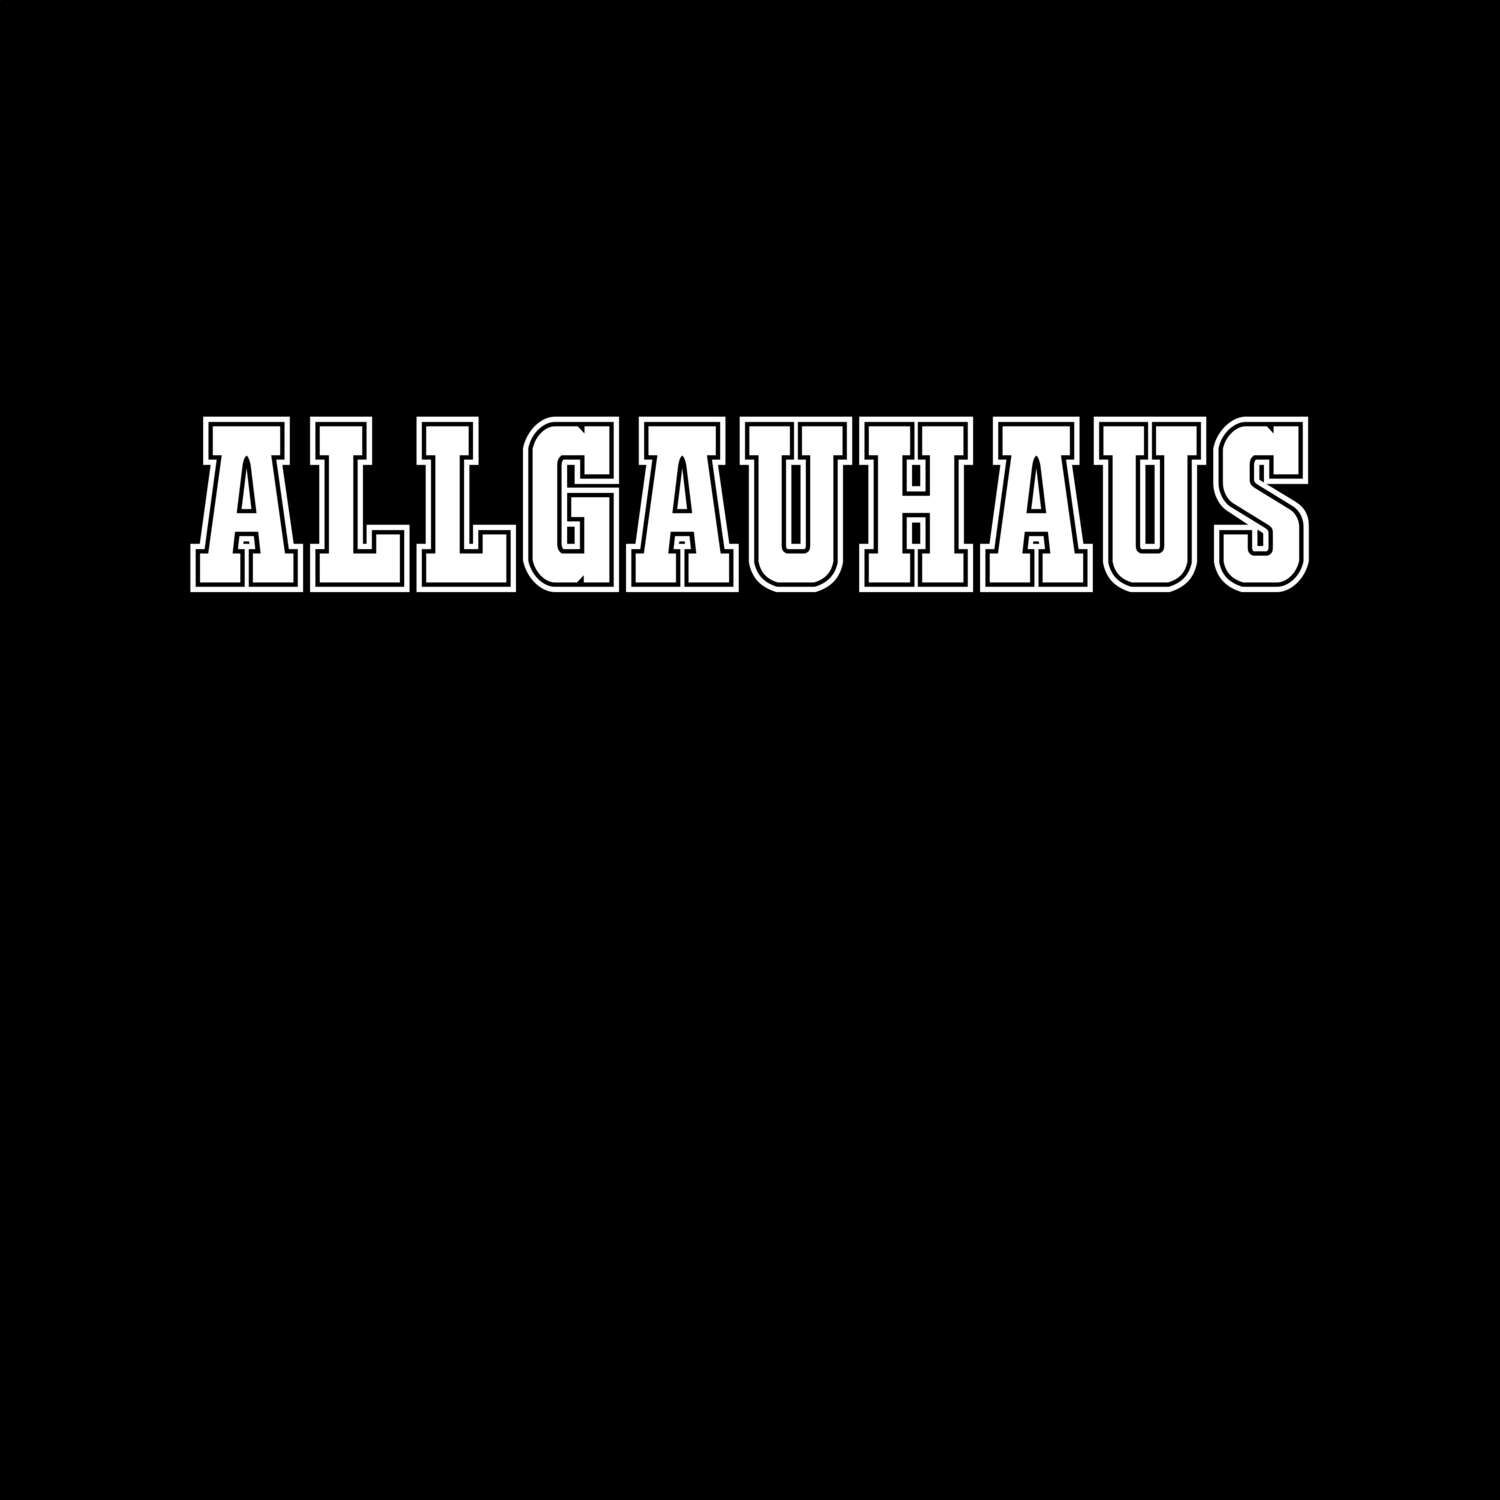 Allgauhaus T-Shirt »Classic«